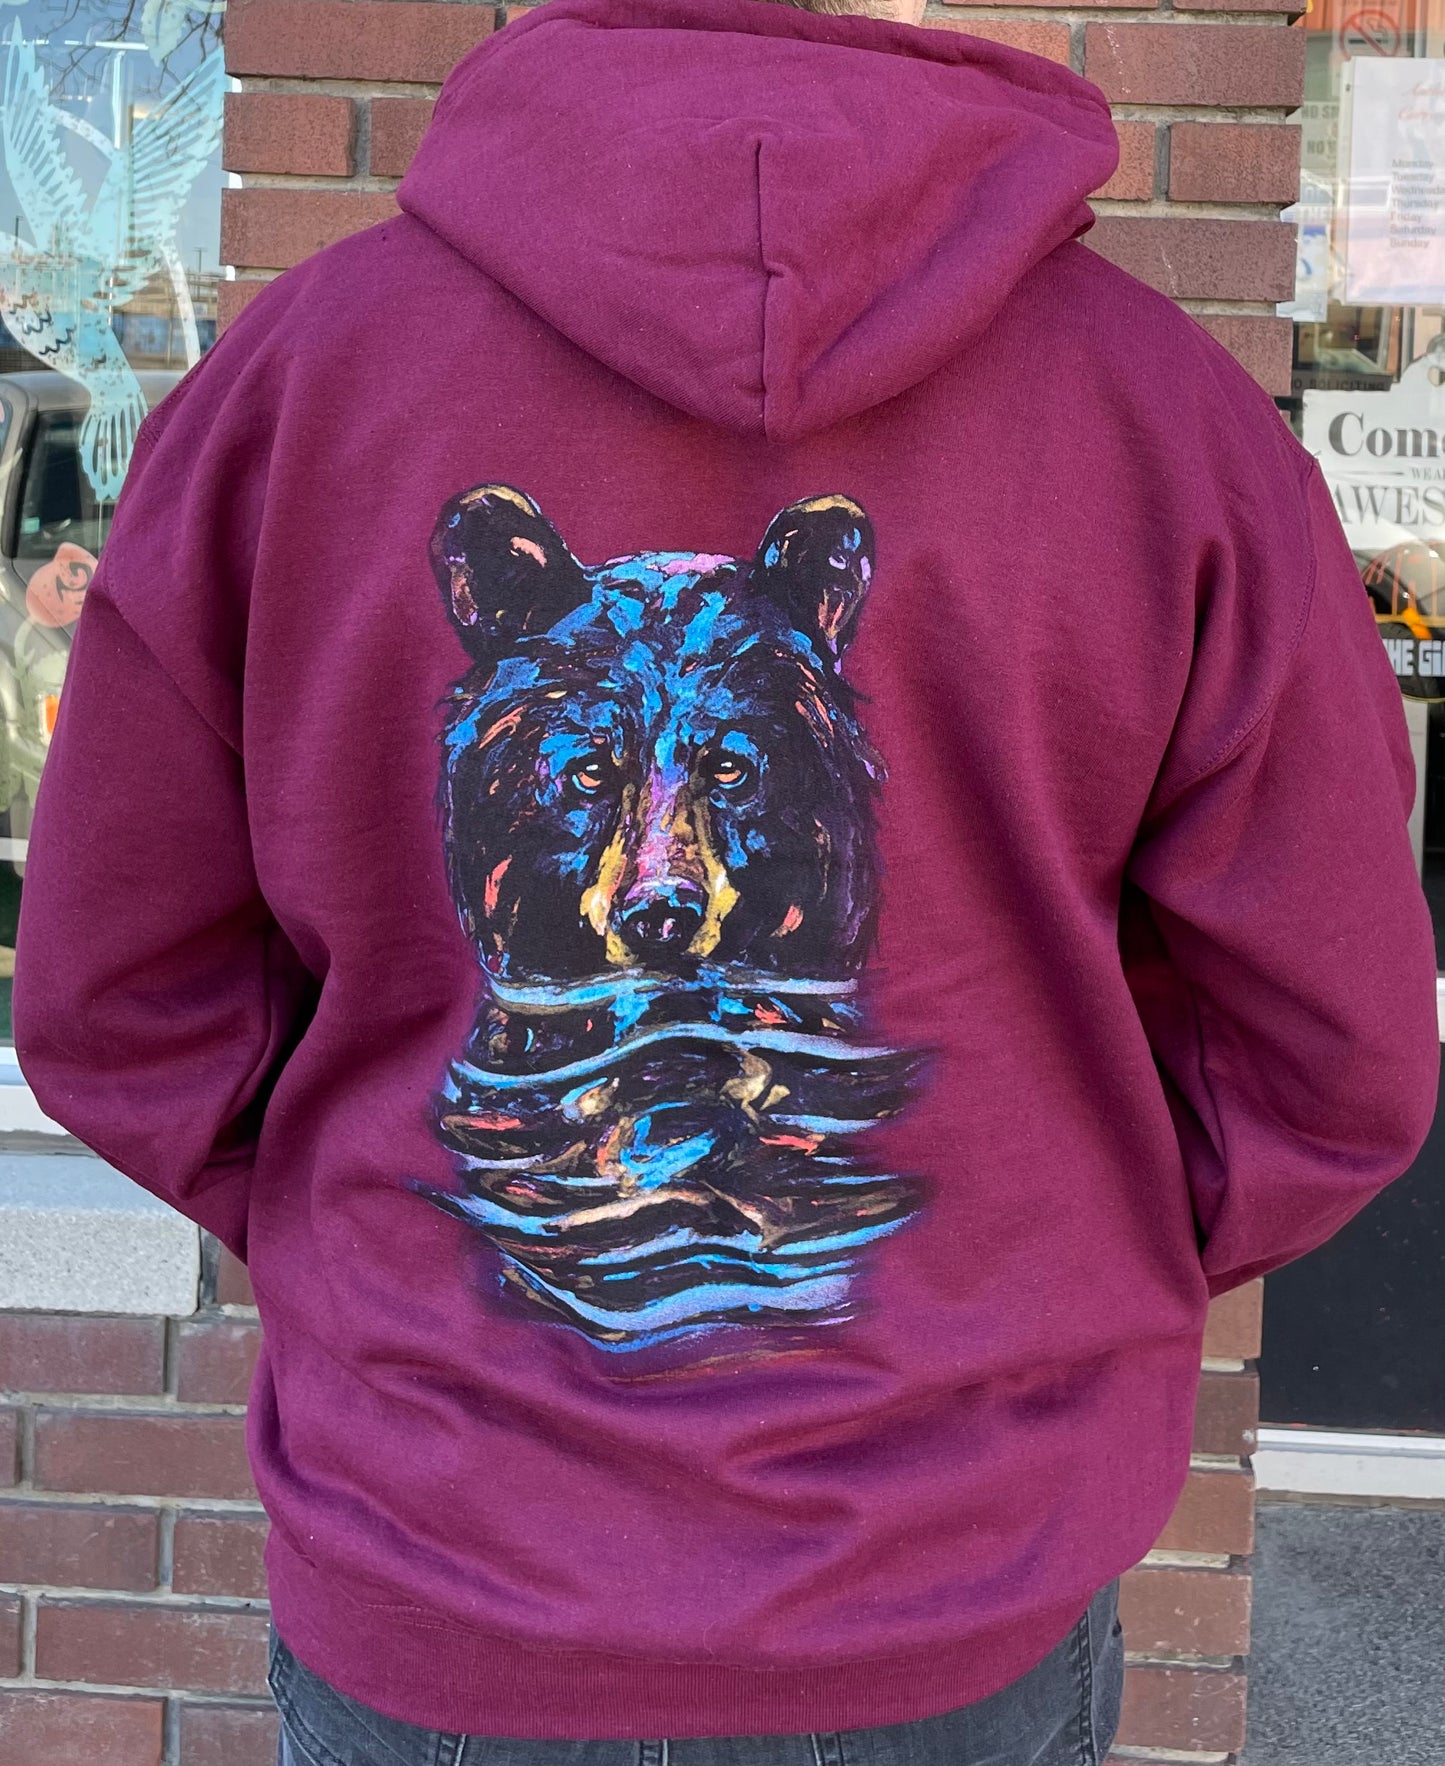 Souvenir Clothing - Very Wet Bear - Hooded Sweatshirt - Thunder Bay, Canada - Maroon